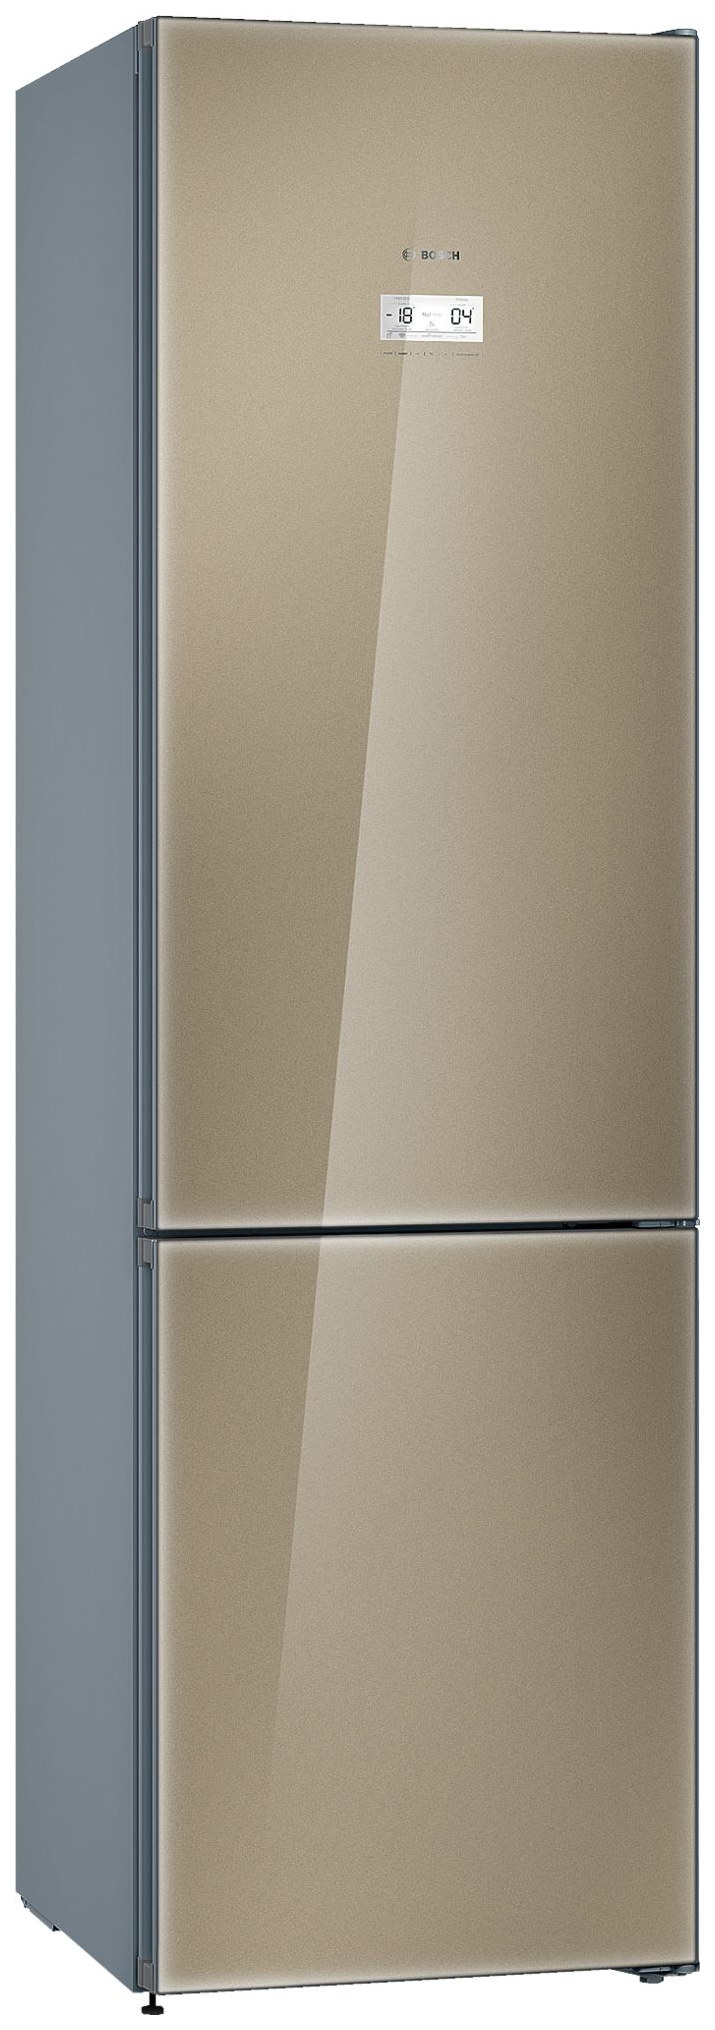 фото Холодильник bosch kgn39lq31r brown/silver